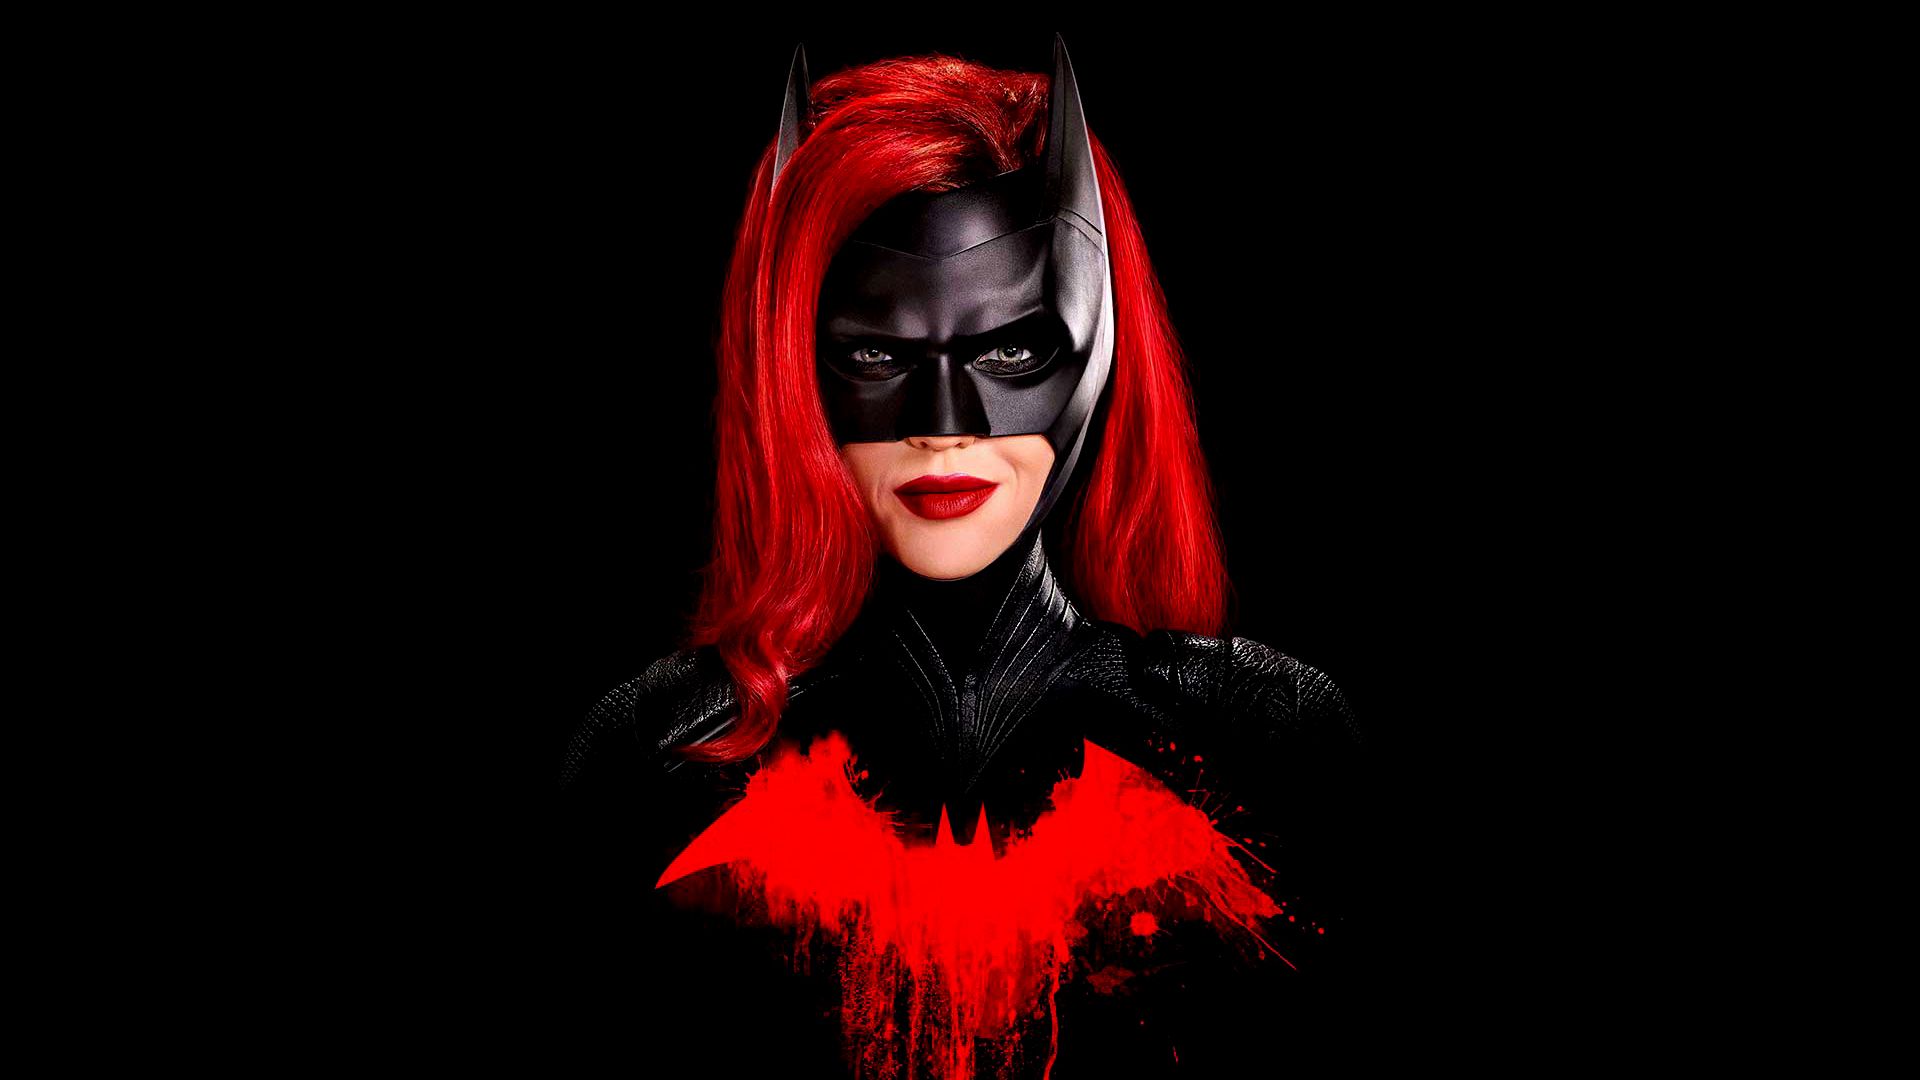 Batwoman background